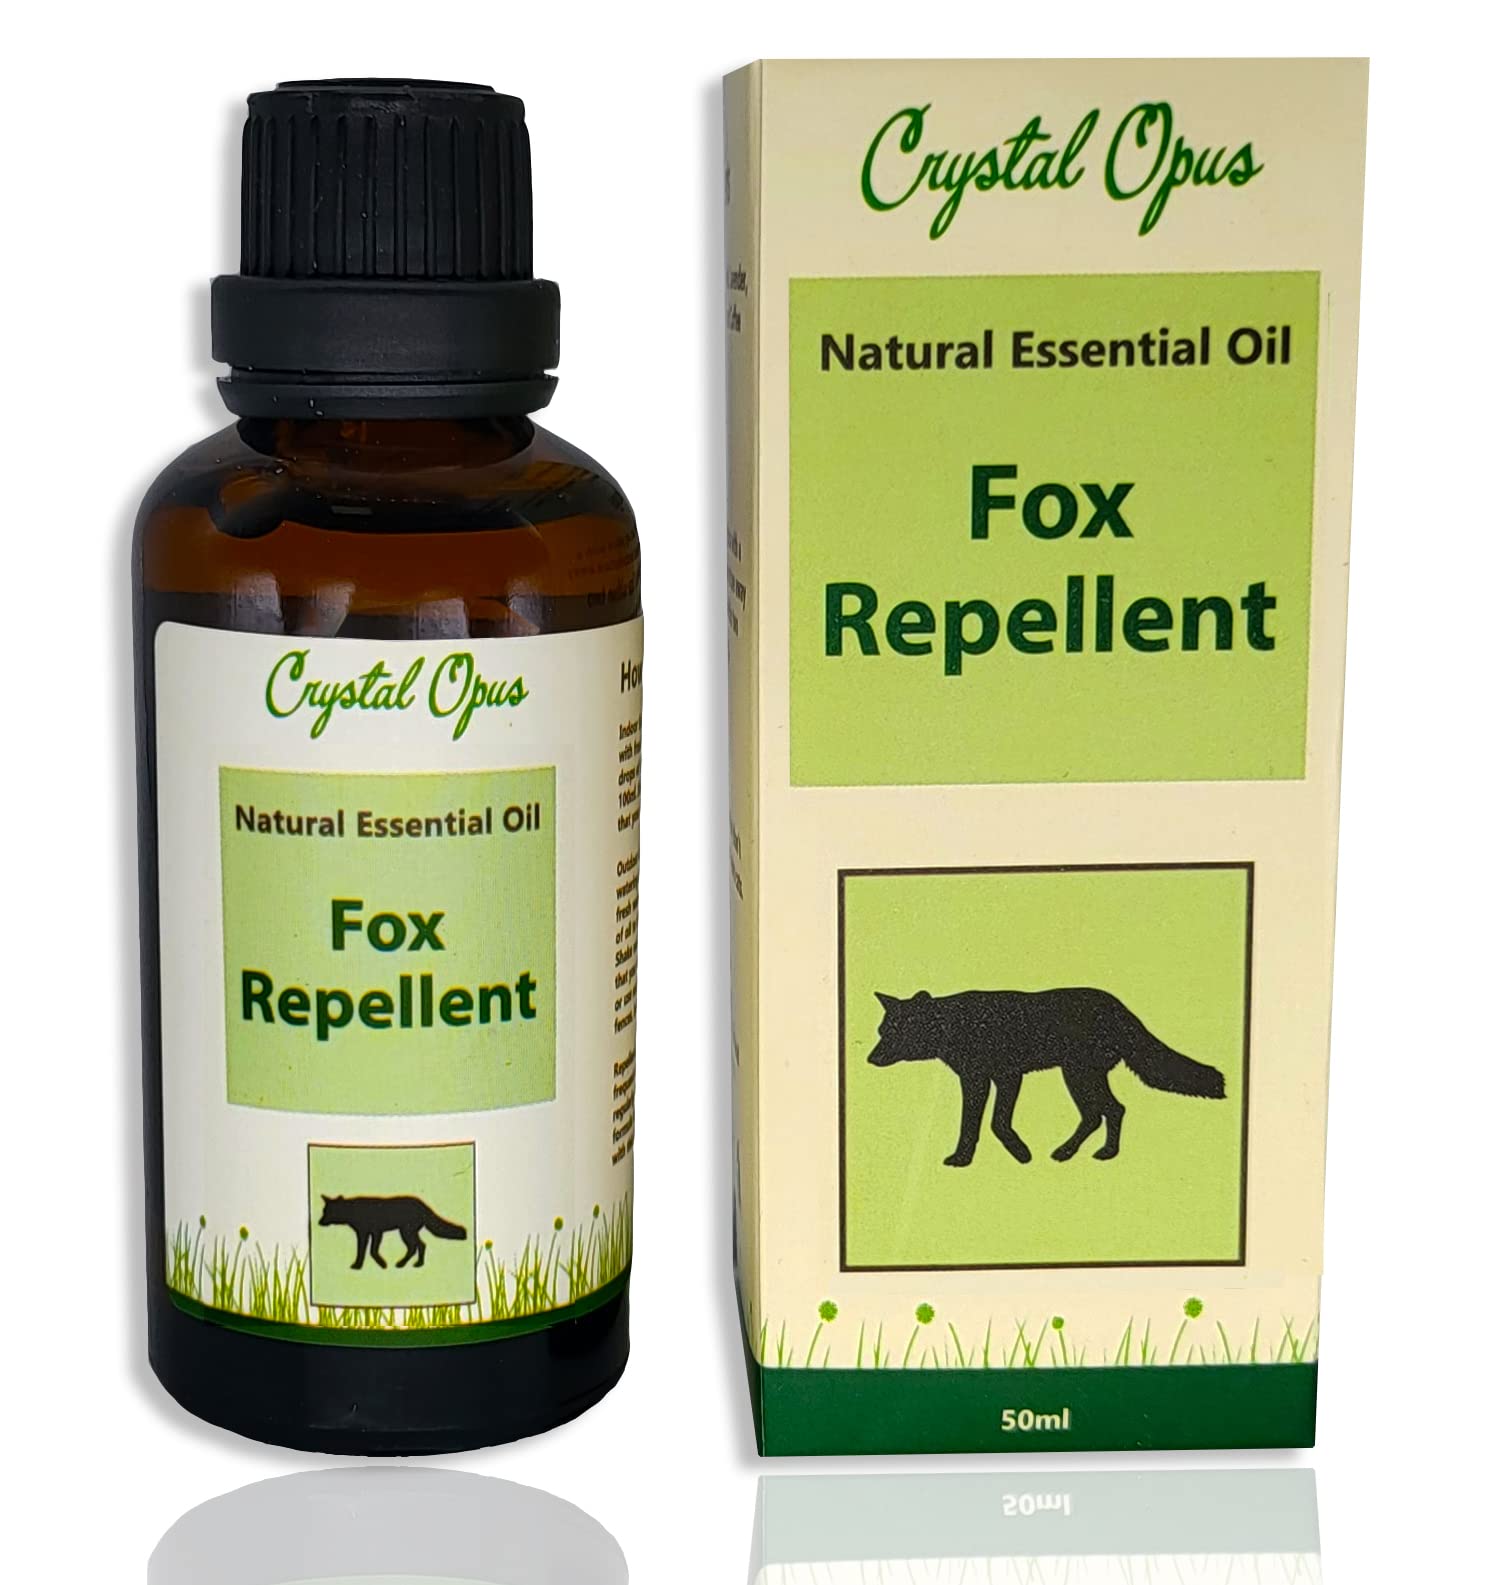 Crystal Opus Fox Repellent Spray